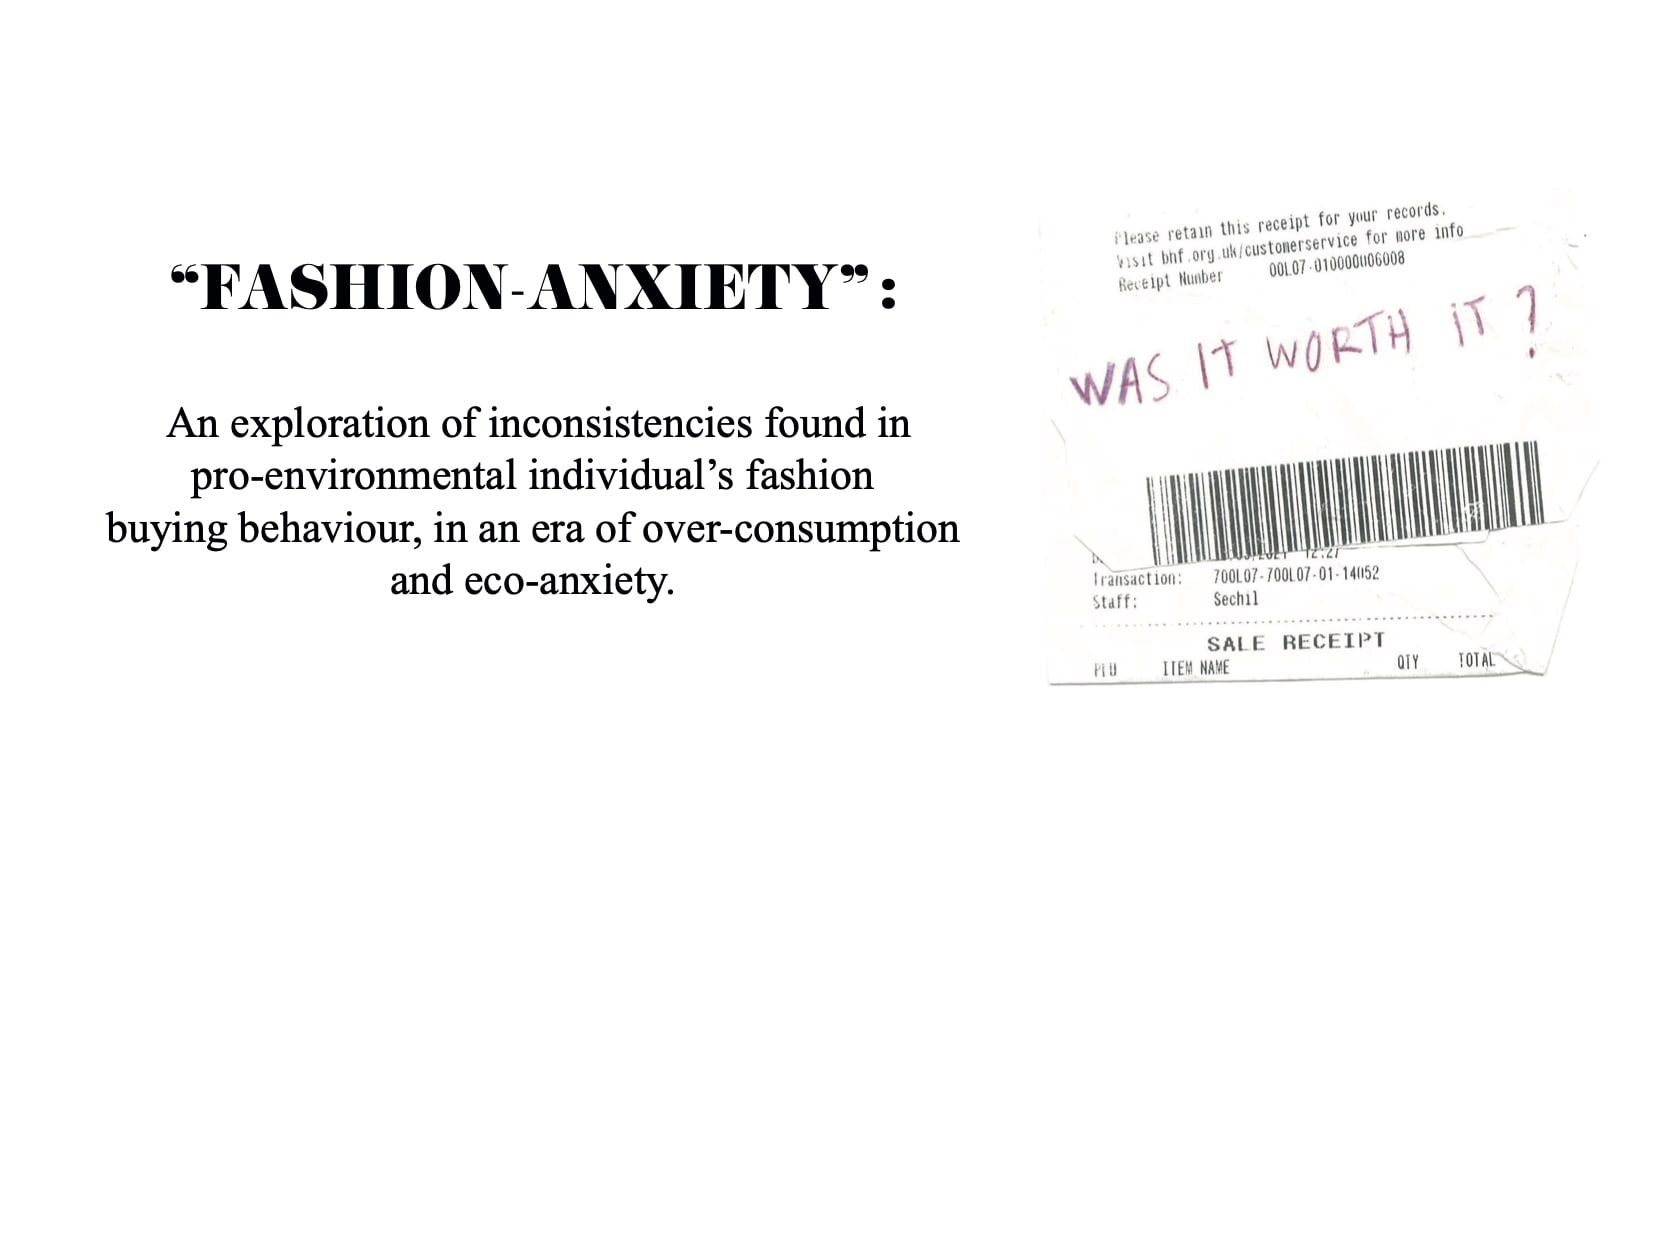 Fashion-Anxiety